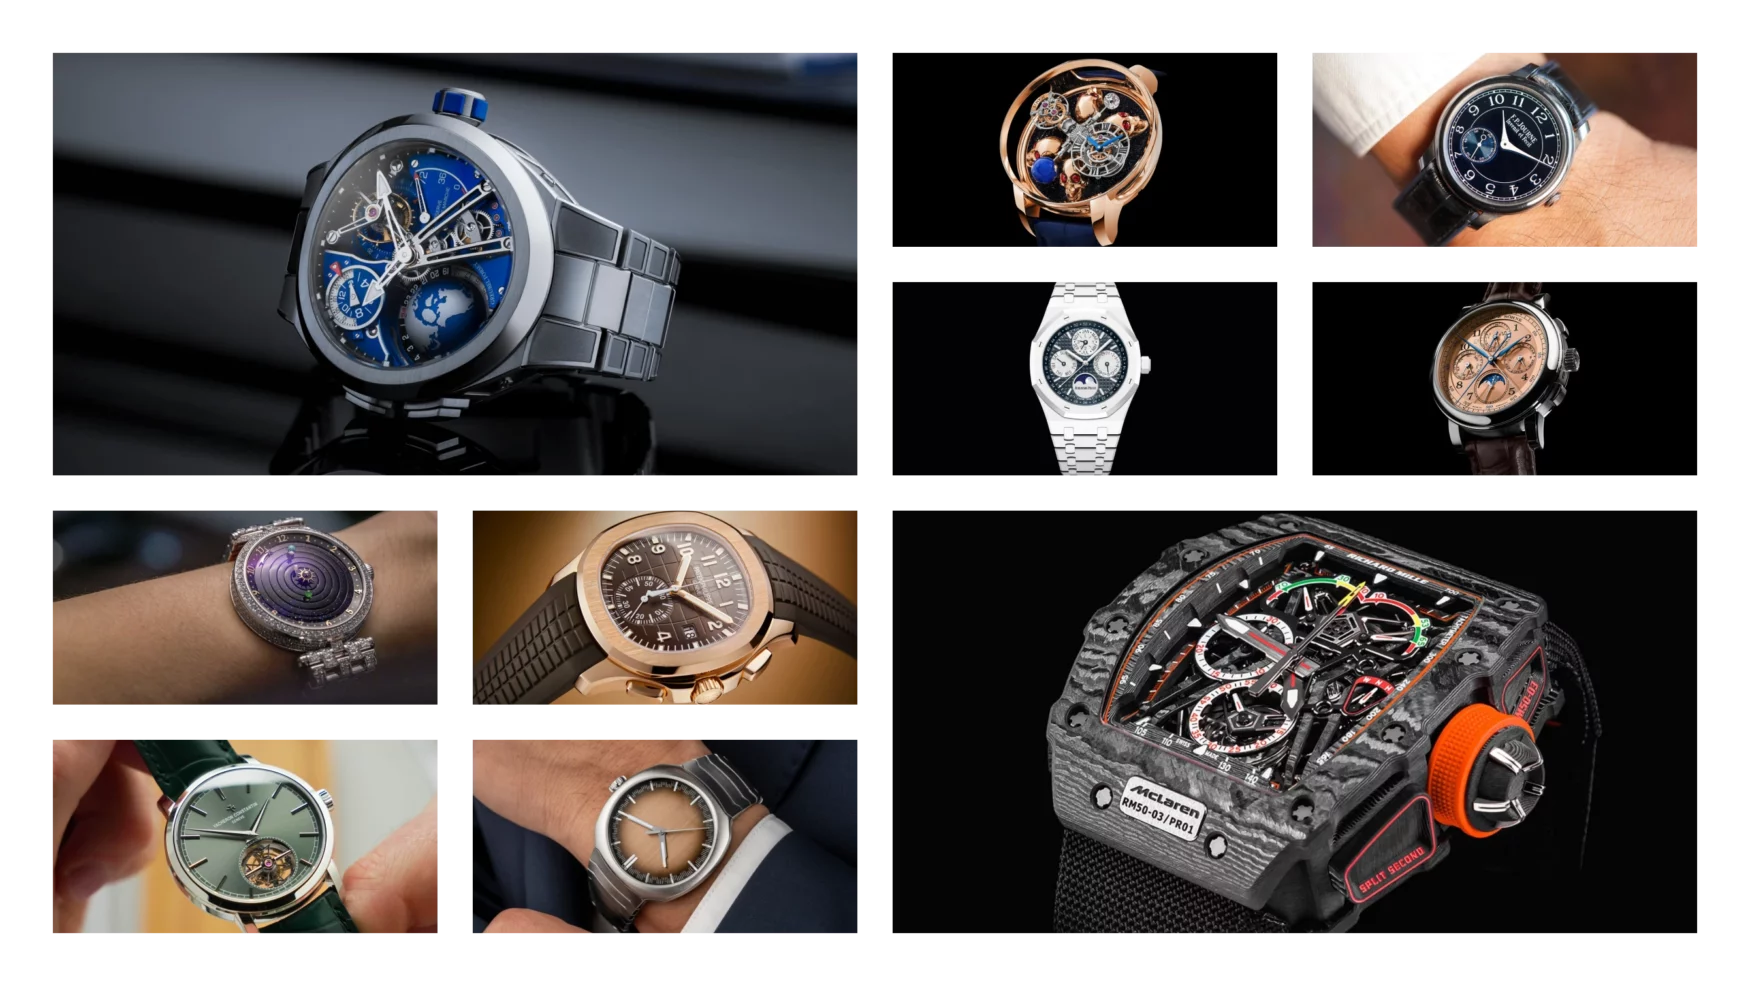 Top 9 German Watch Brands | German Watches | WhichWatch.org